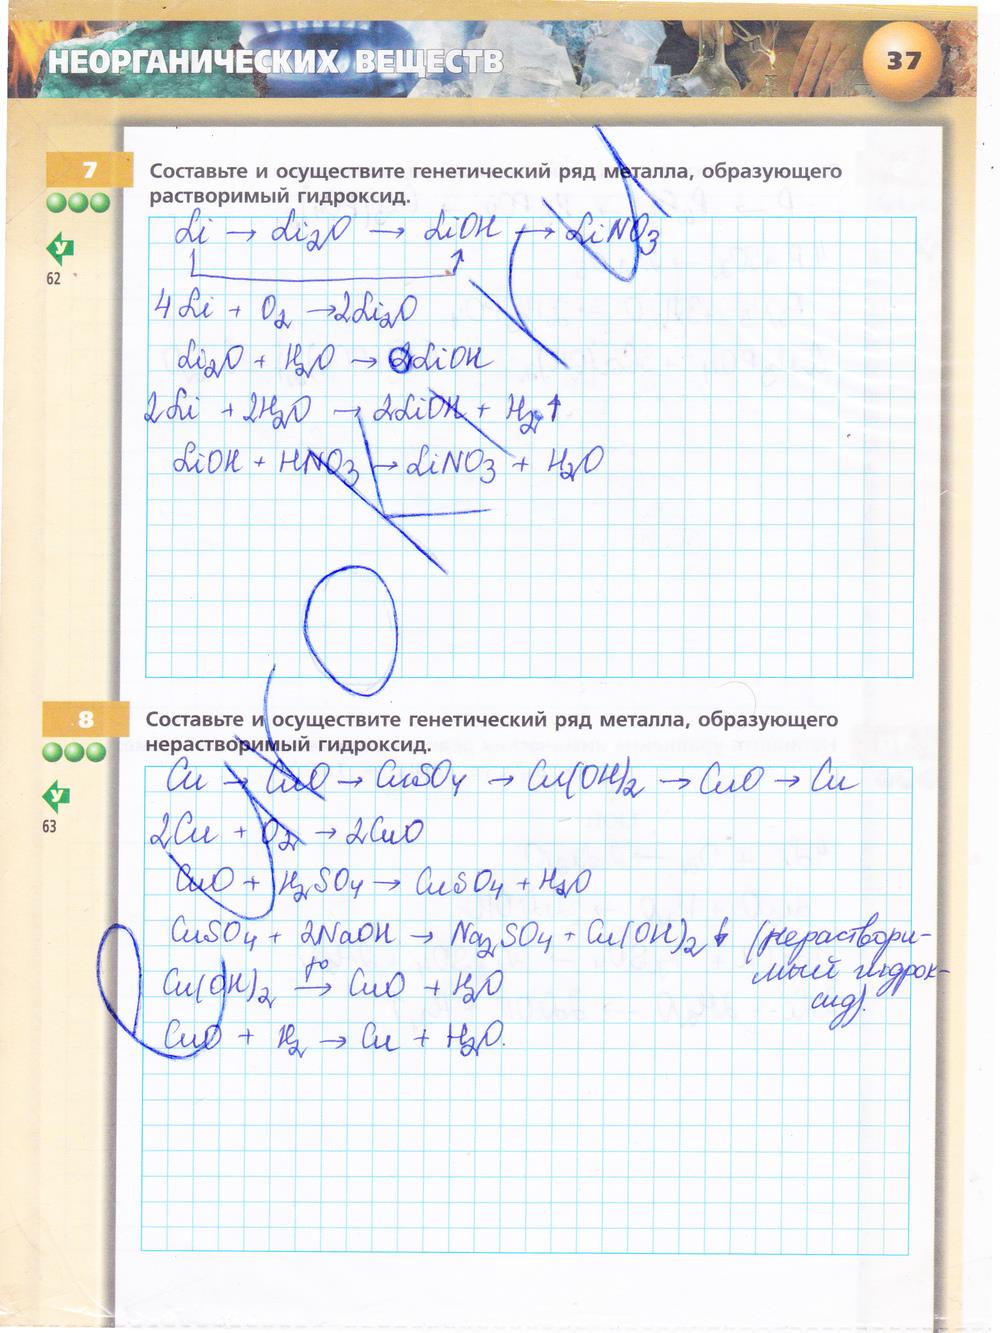 гдз 8 класс тетрадь-тренажёр страница 37 химия Гара